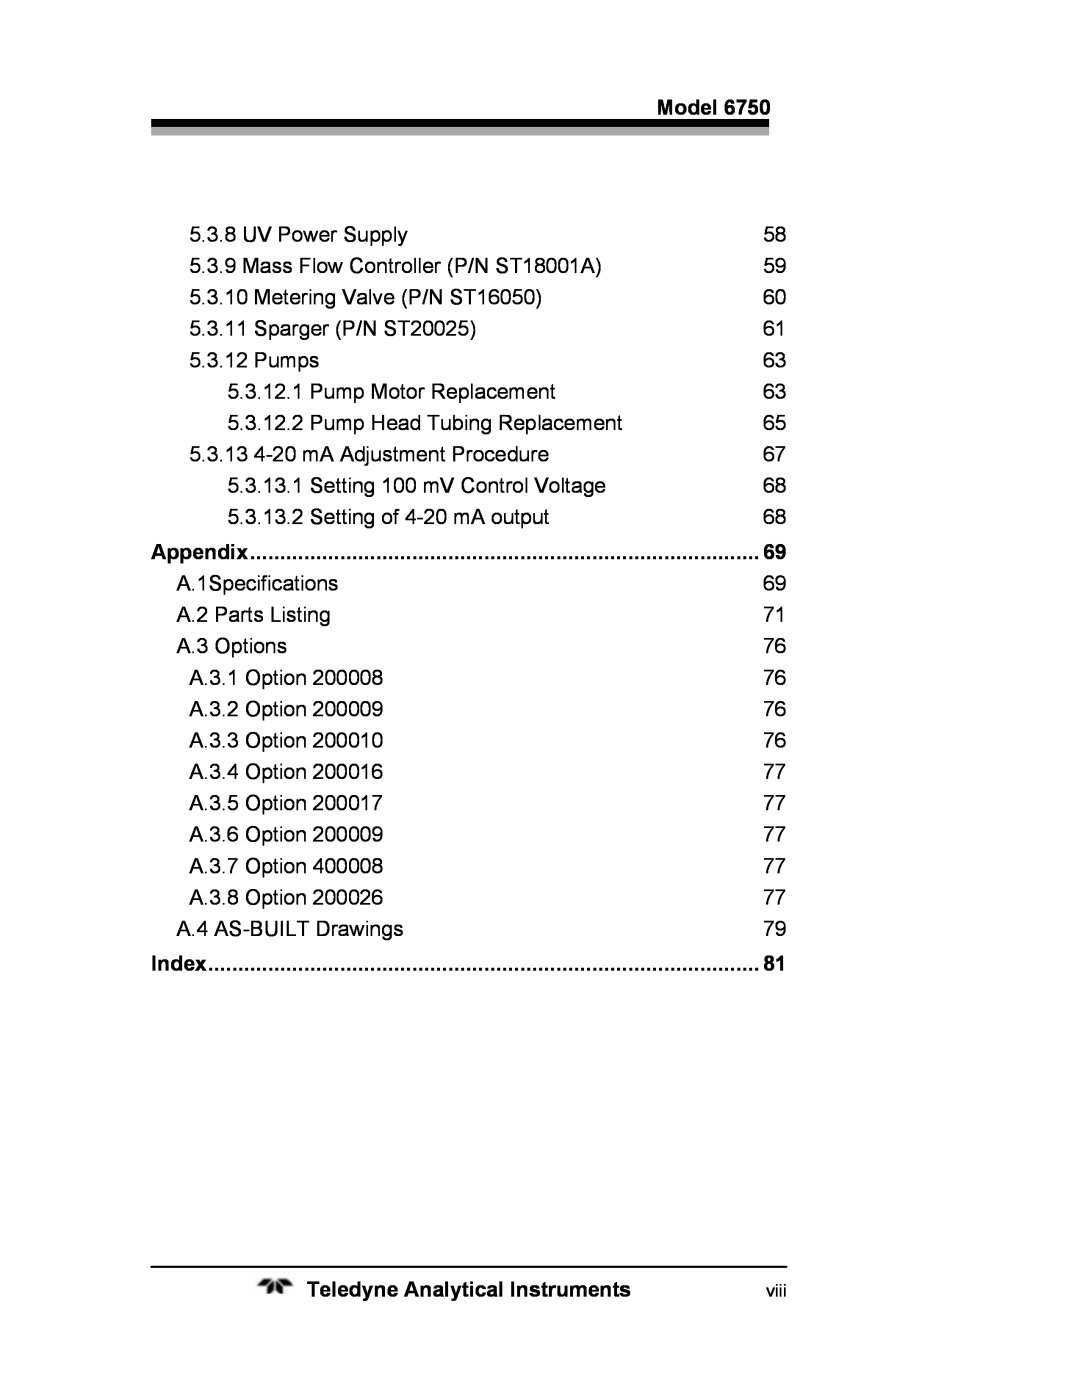 Teledyne 6750 operating instructions Model, Appendix, Index, Teledyne Analytical Instruments 